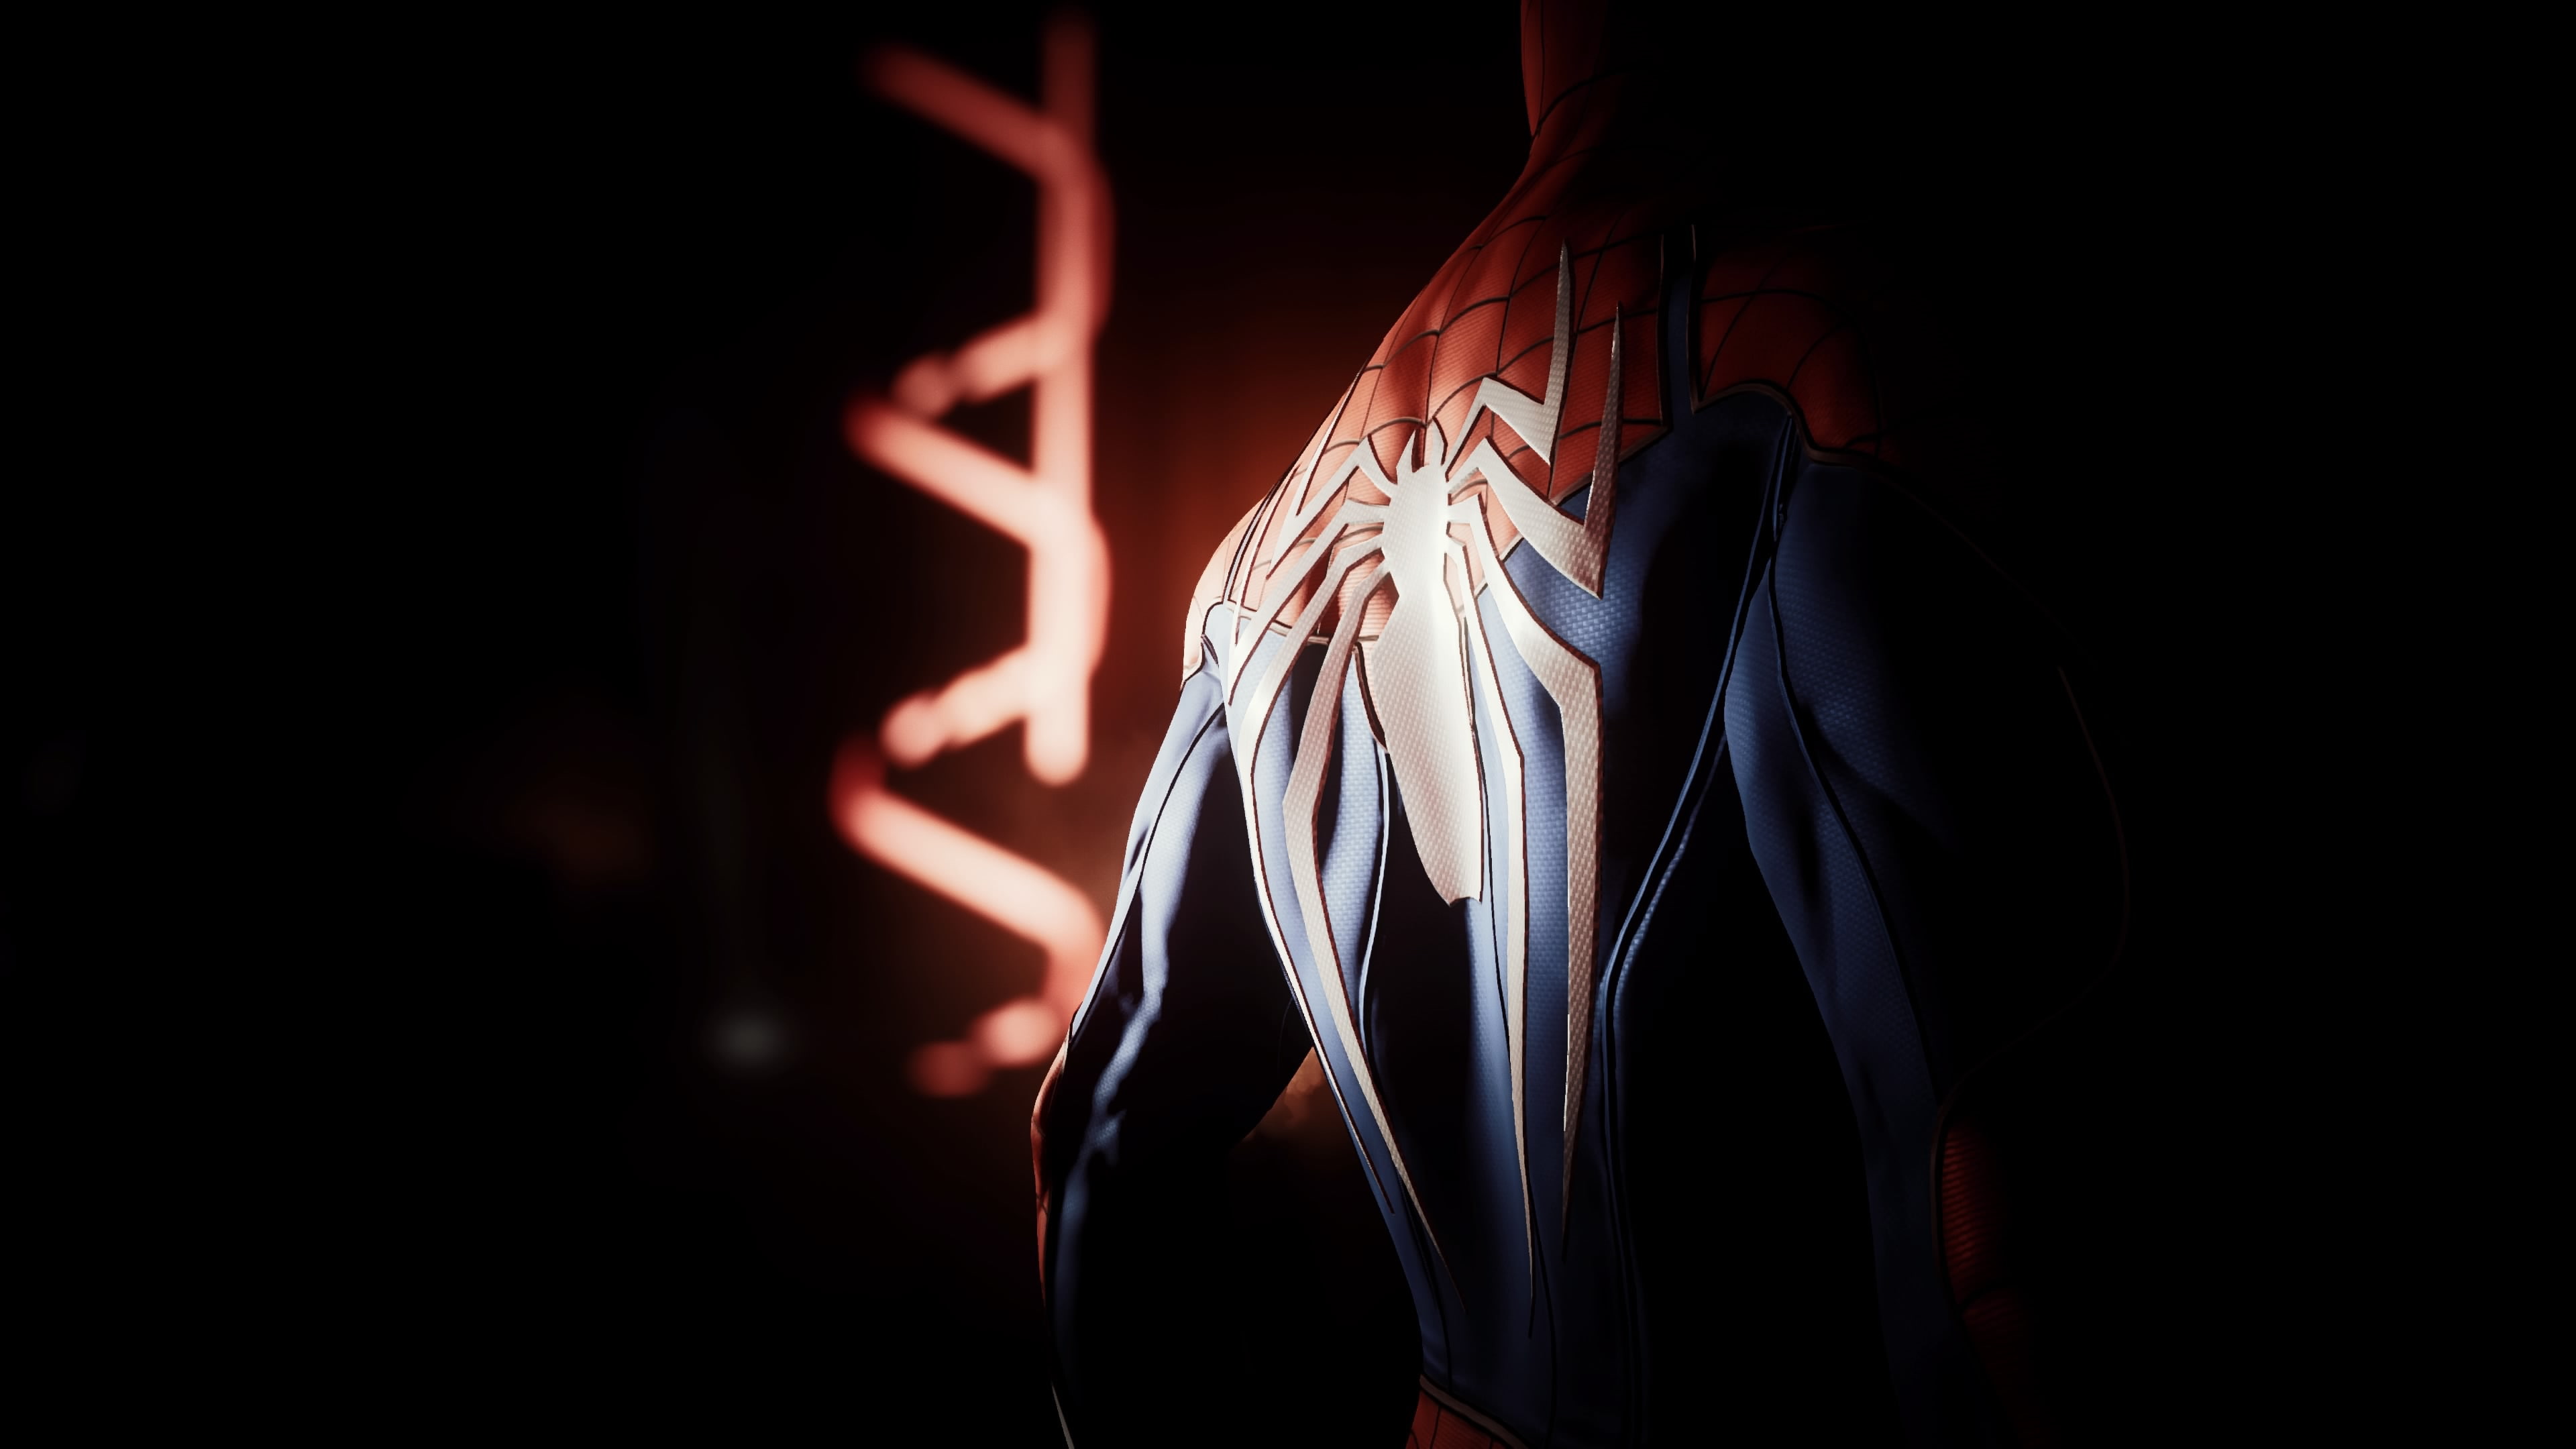 spiderman4.jpg